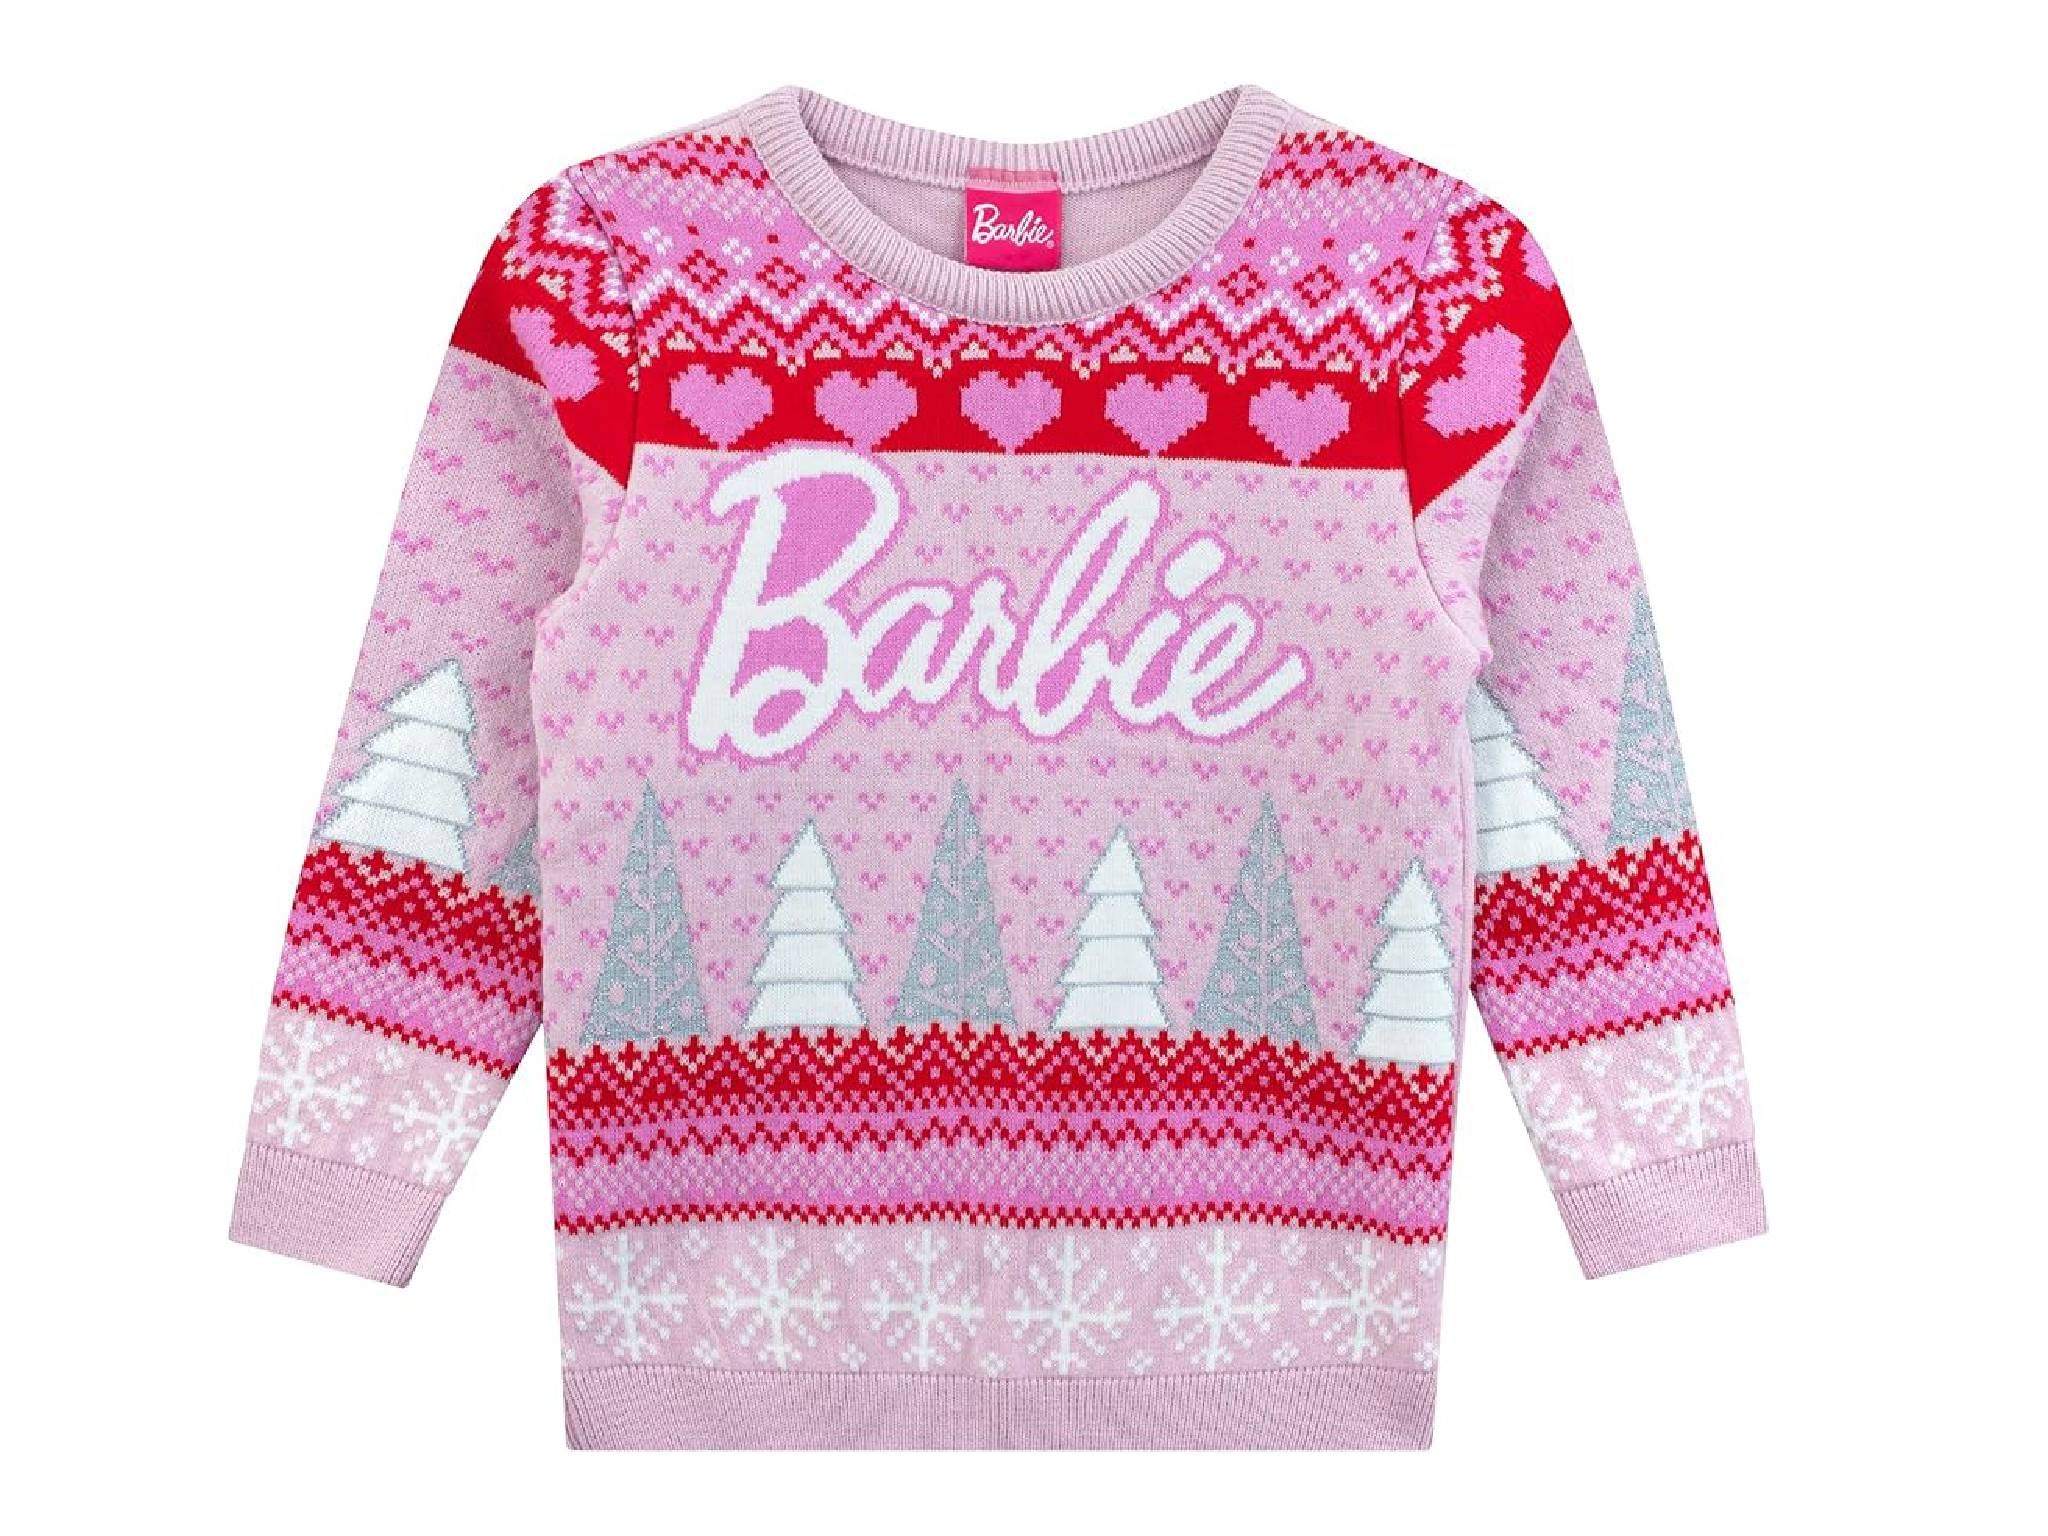 Barbie Christmas jumper